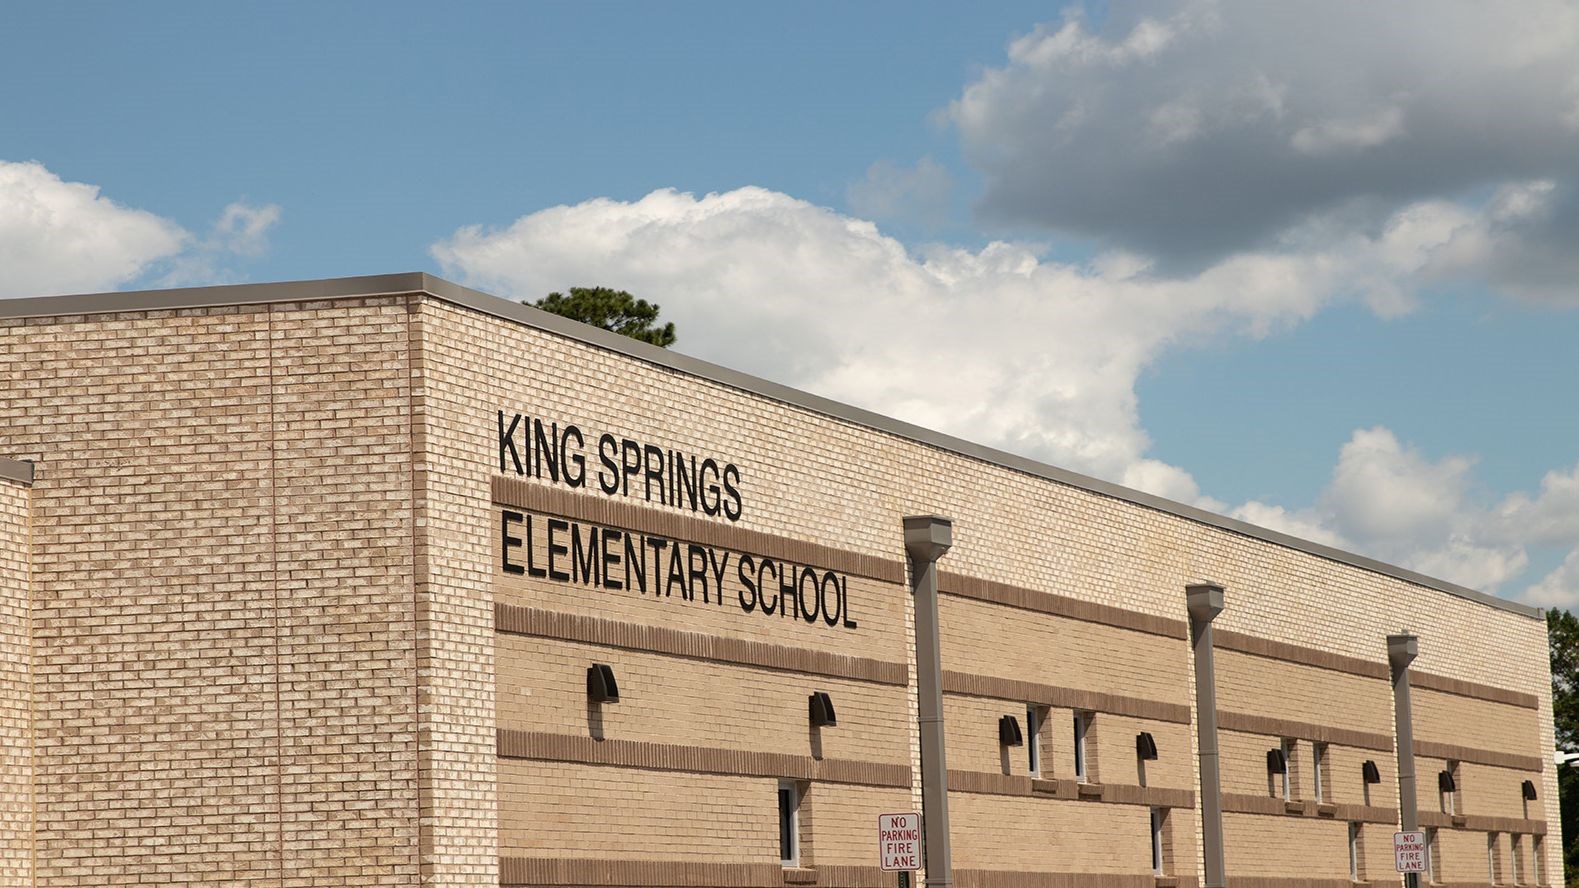 EdSPLOST Projects for King Springs Elementary School